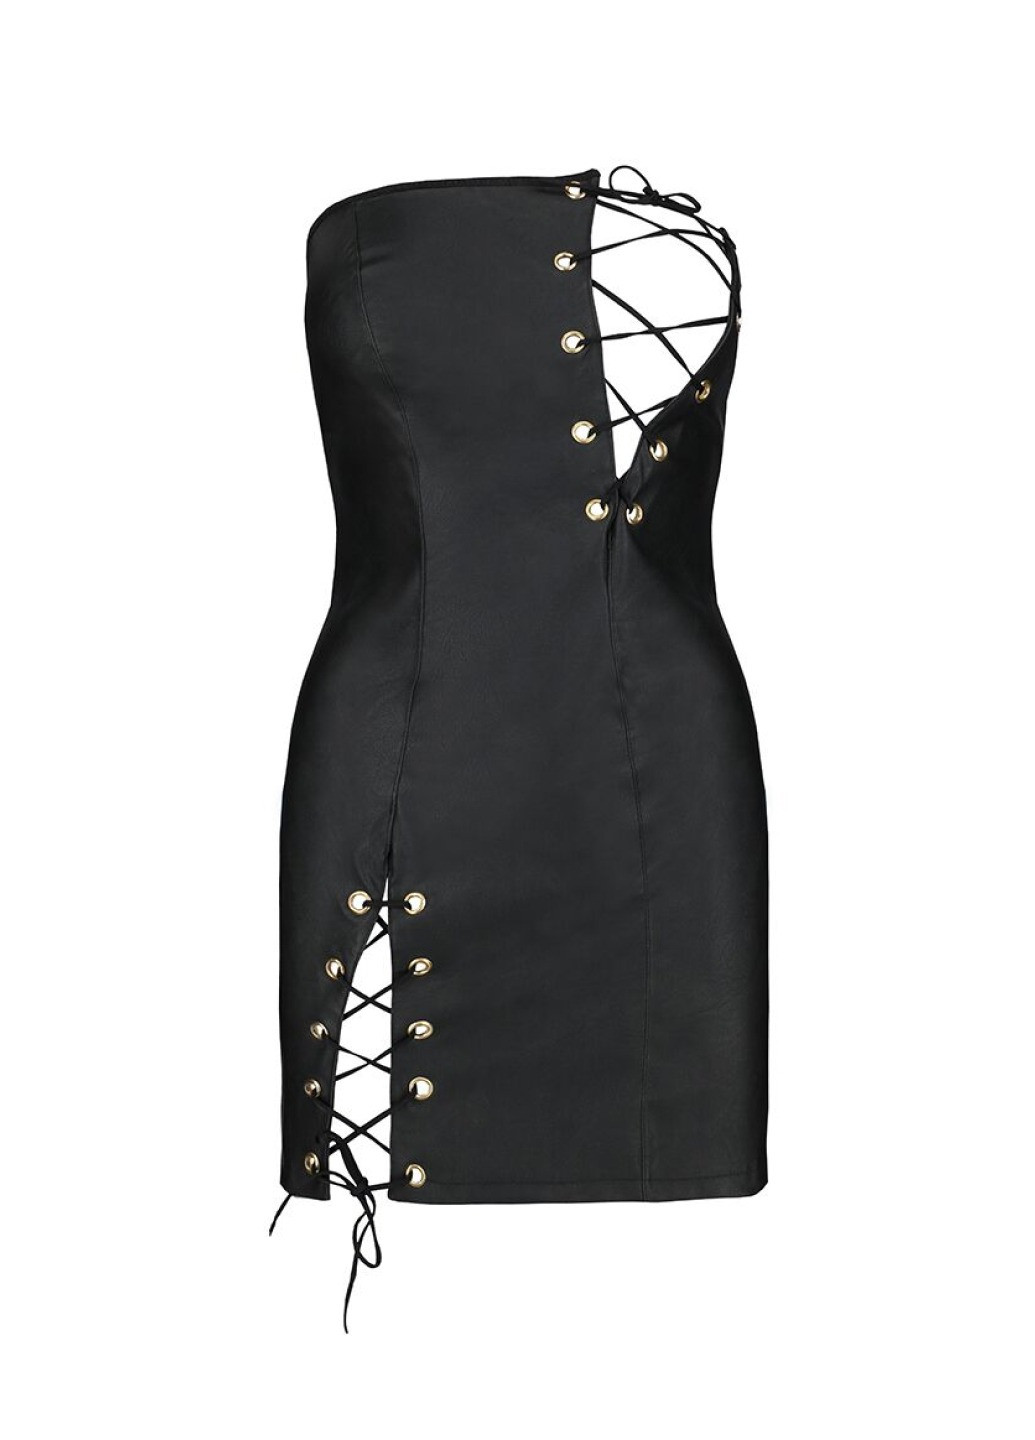 Мини-платье из экокожи CELINE CHEMISE black S/M — : шнуровка, трусики в комплекте Passion (276392836)